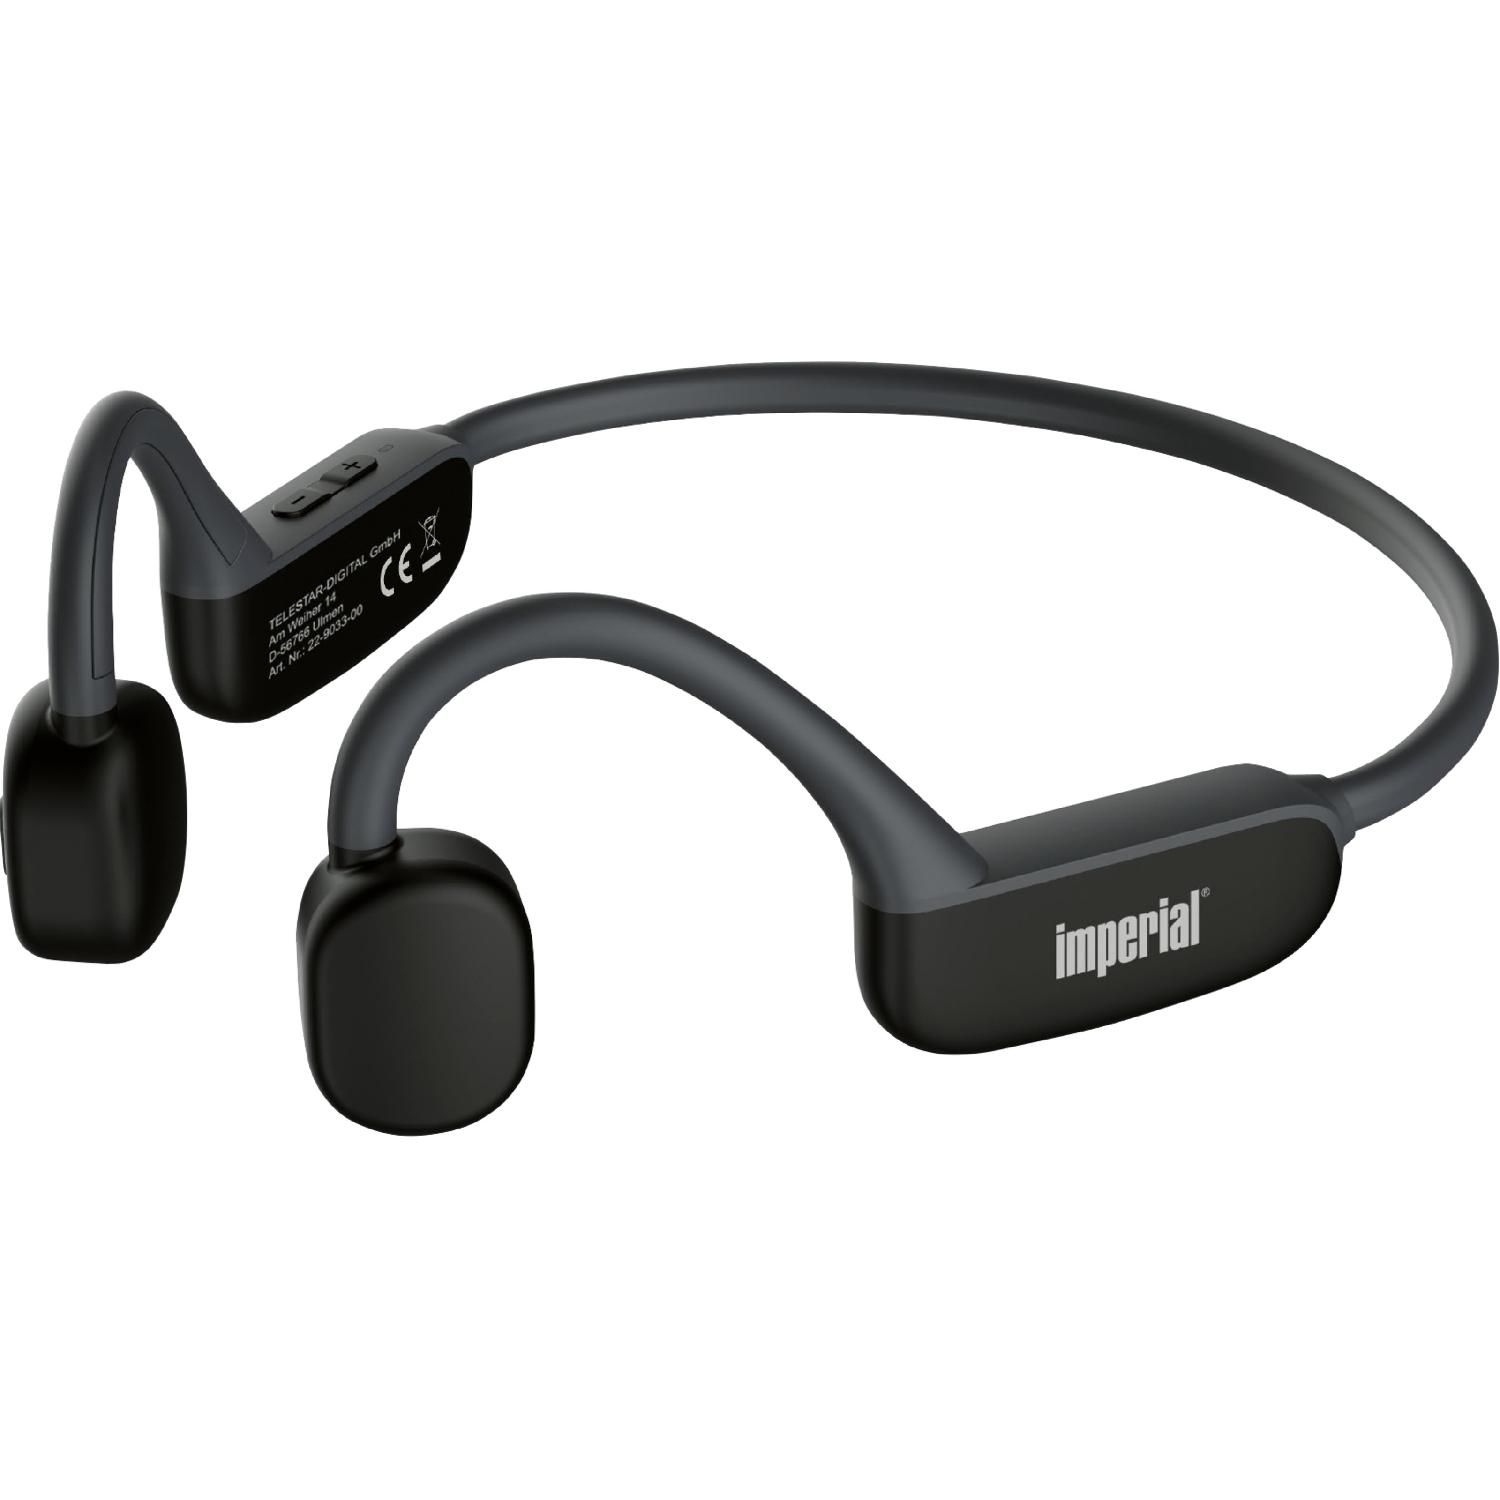 IMPERIAL bluTC active Neckband Headset 1, schwarz